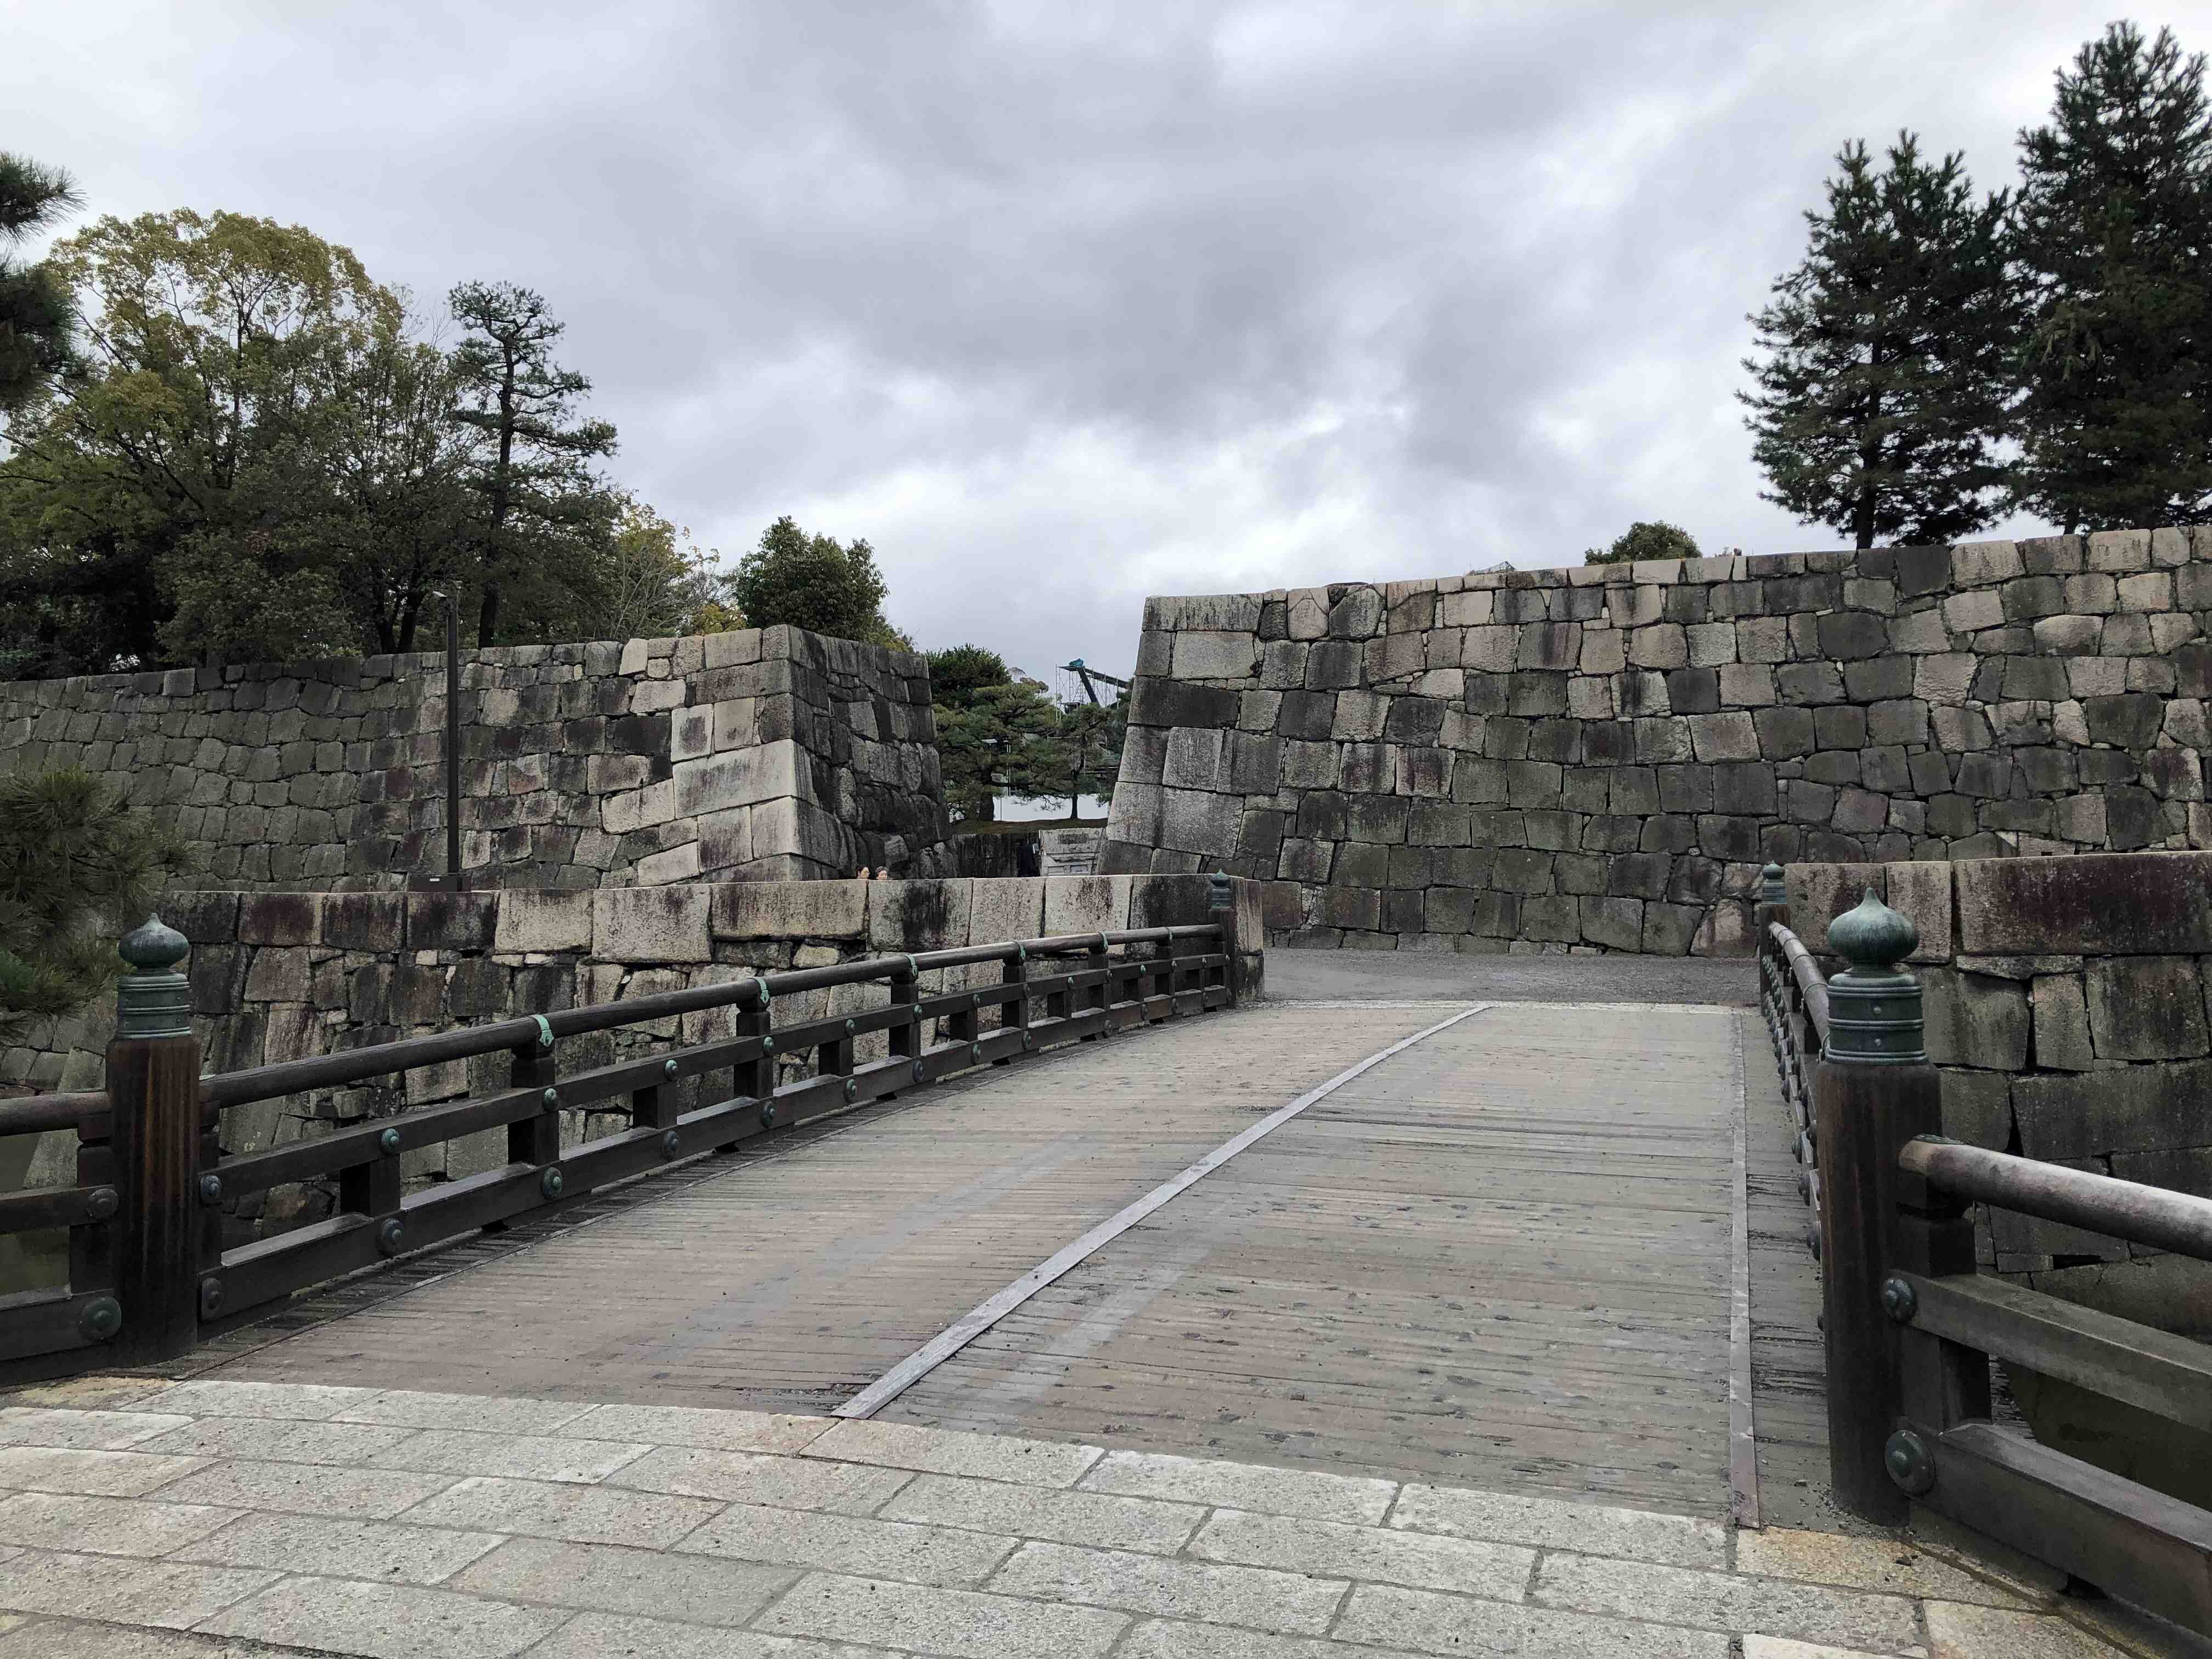 img 0991 - 二條城, 京都景點, 京都自由行, 元離宮二條城, 江戶時代建築